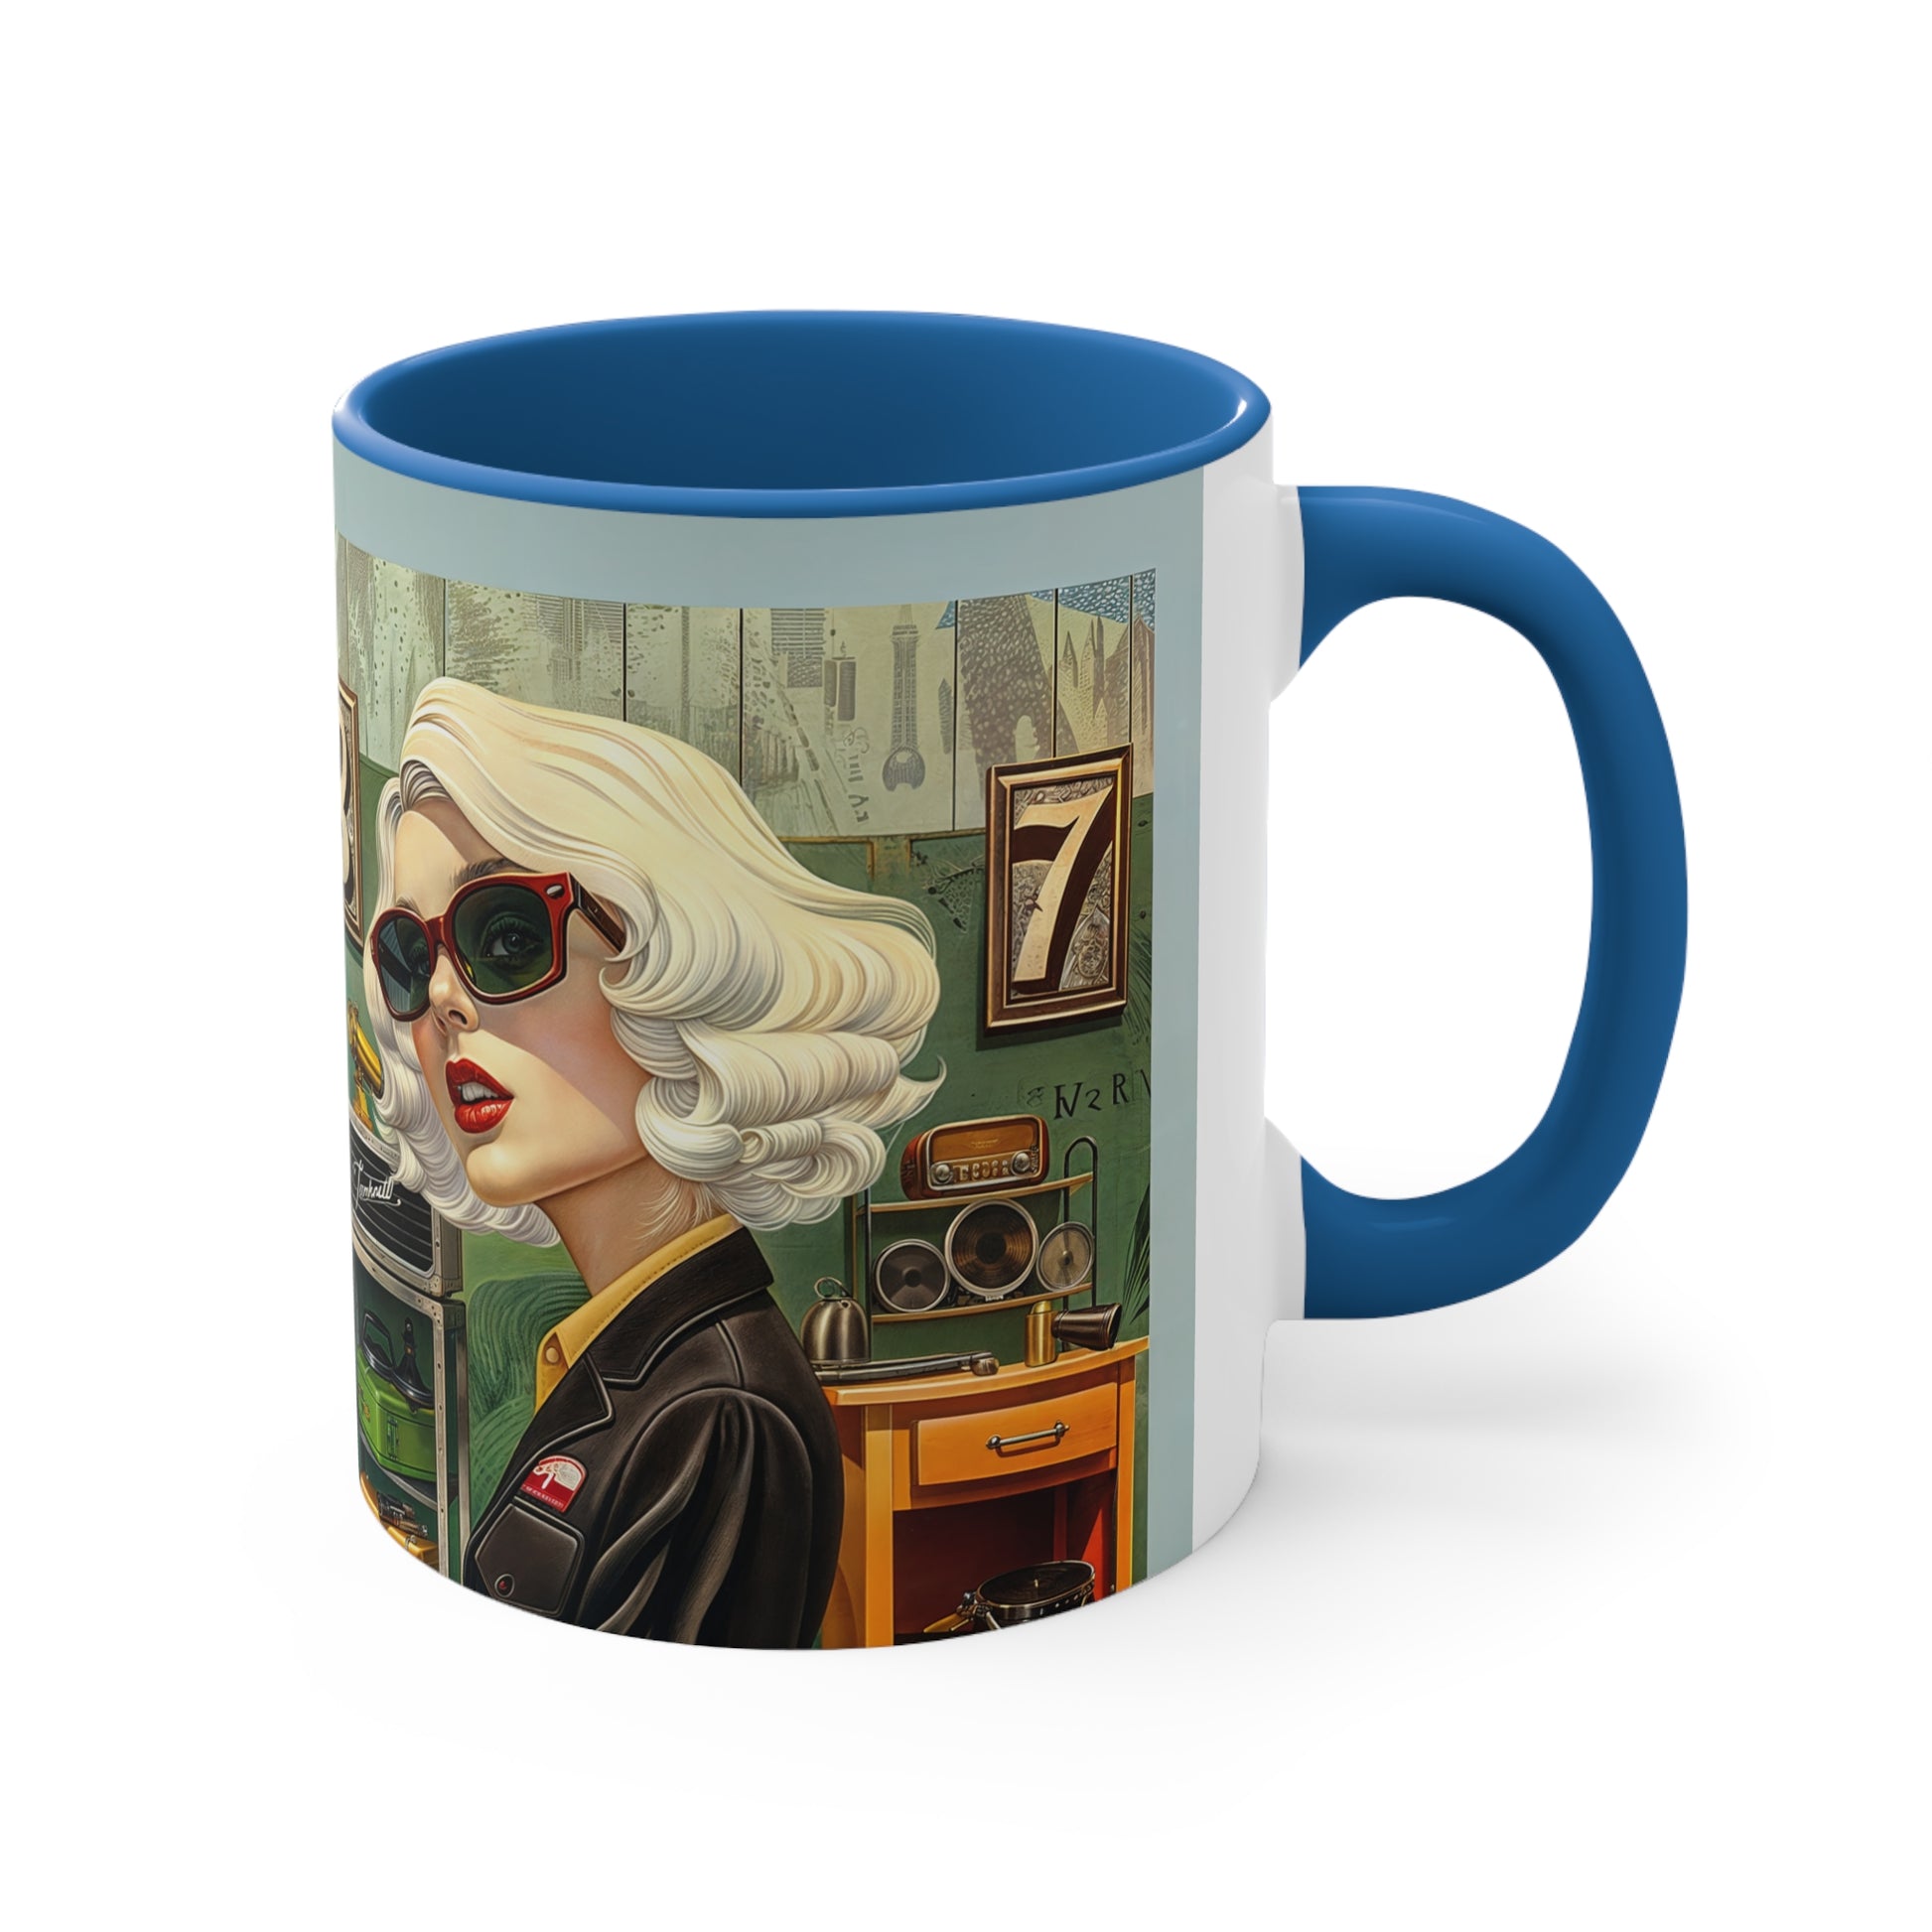 Accent Coffee Mug, 11oz - Tool Time Blonde blue side